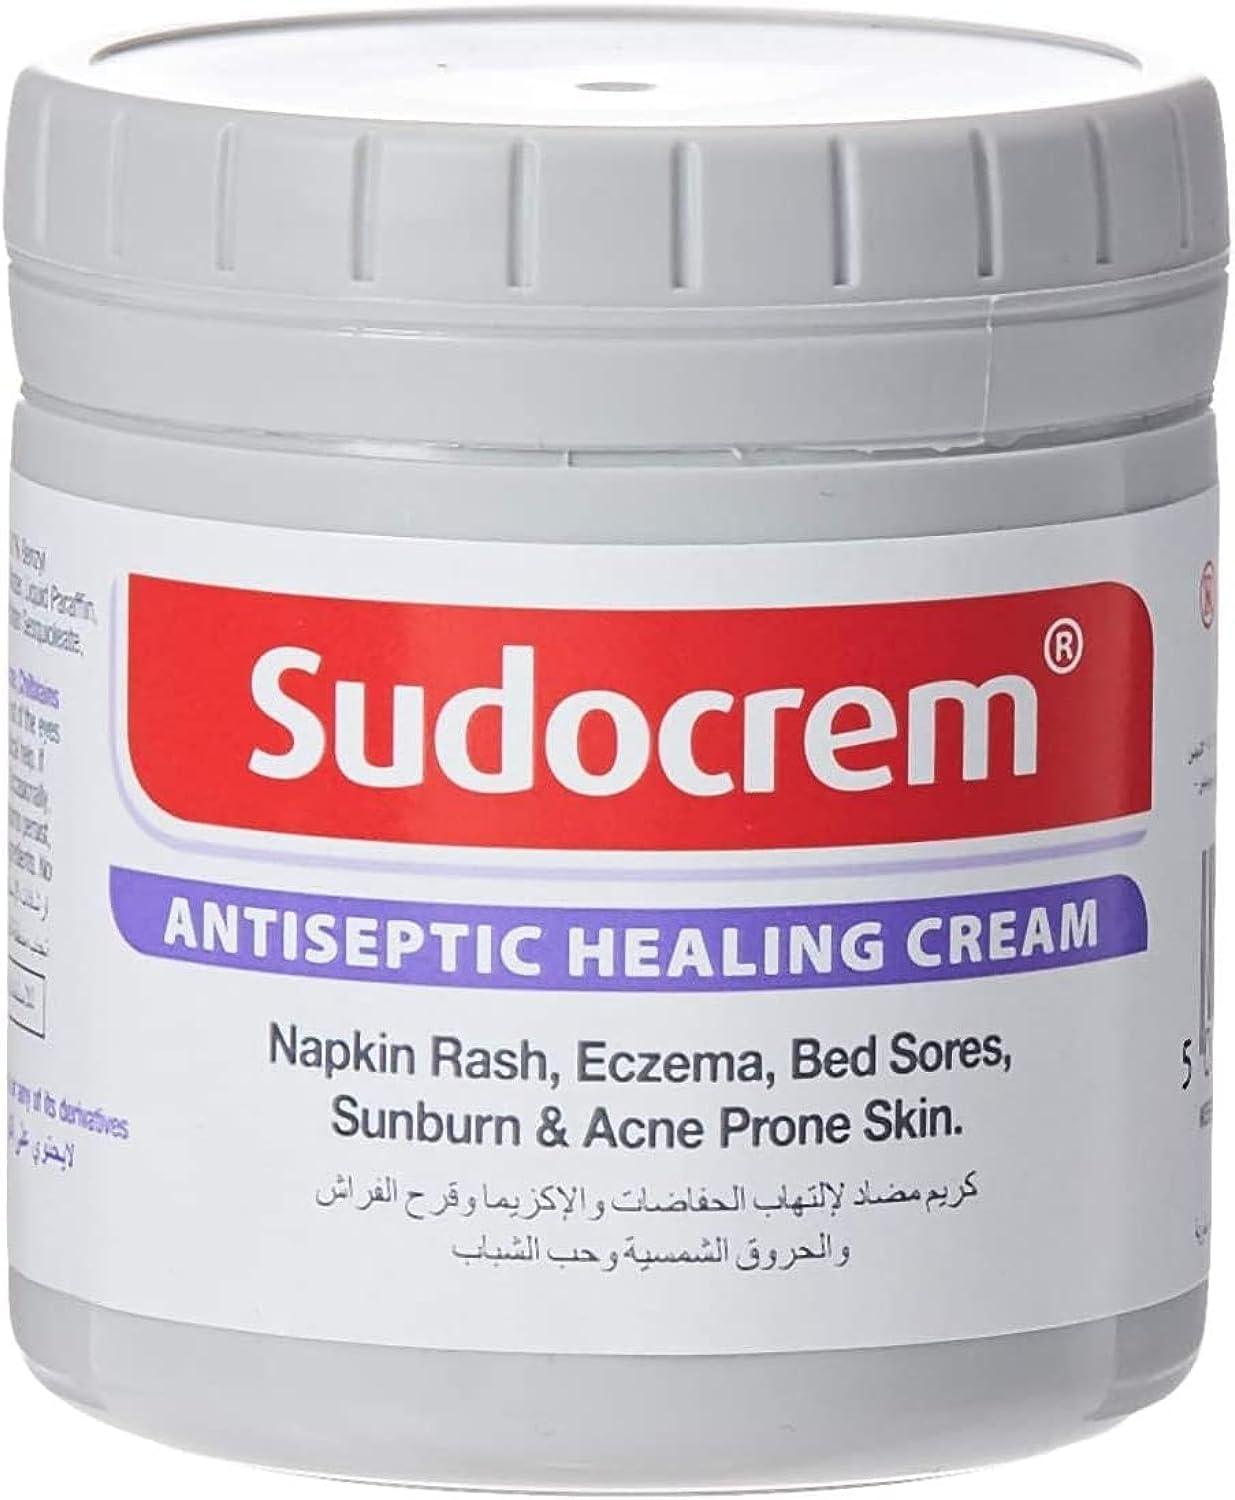 Sudocrem Antiseptic Cream 125g - Wellness Shoppee